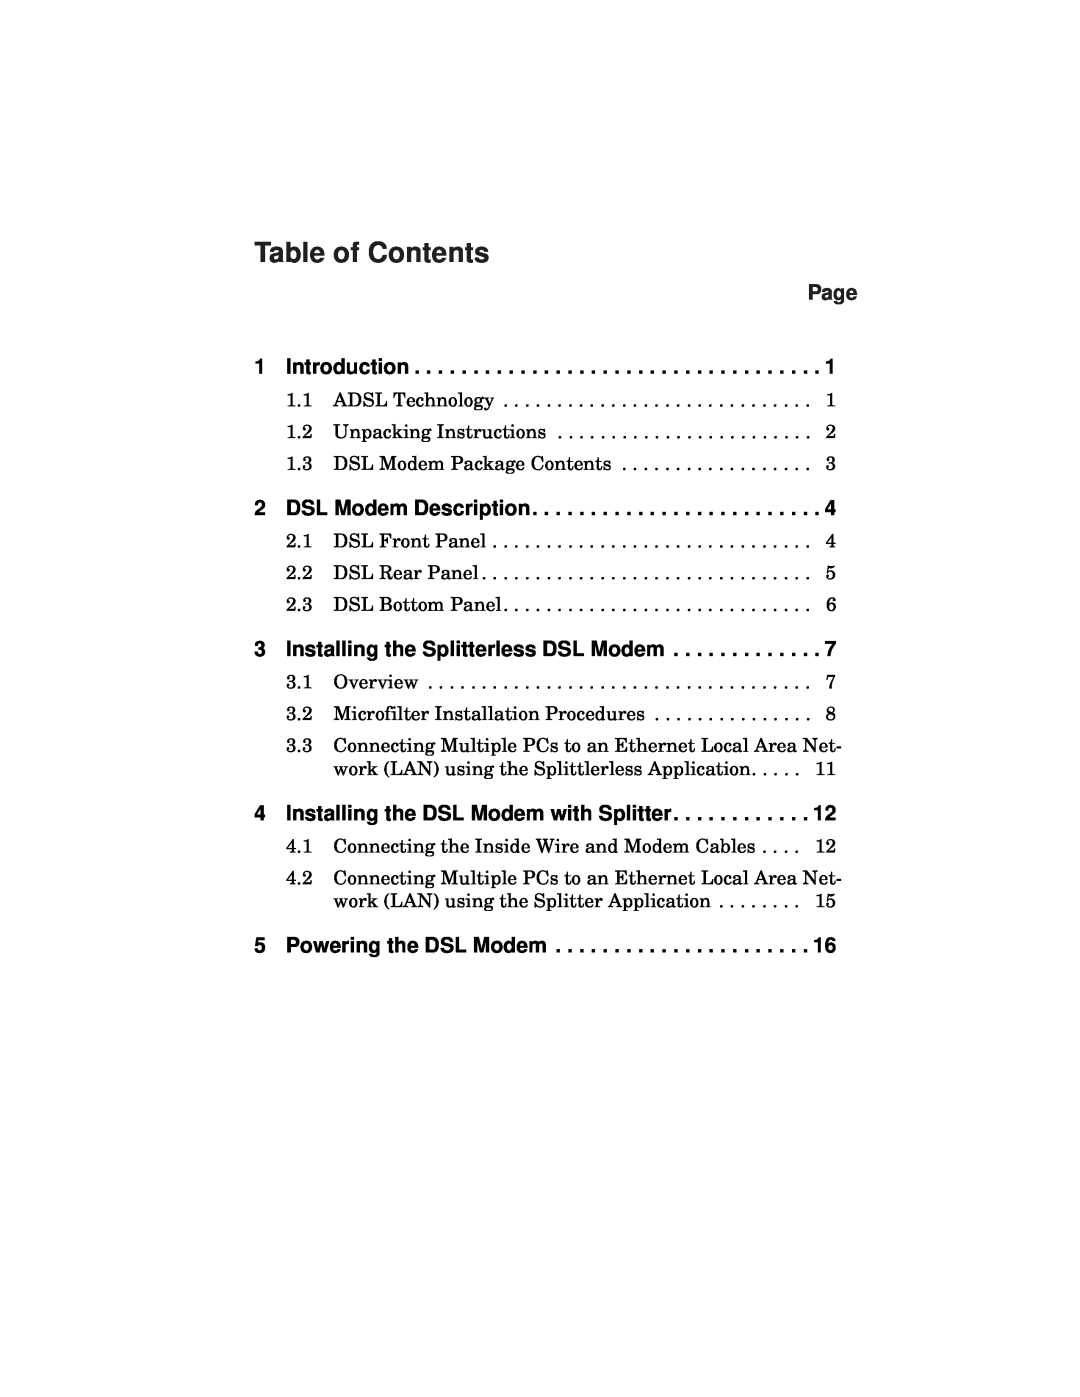 Fujitsu FC9660RA12 Table of Contents, Page, Introduction, DSL Modem Description, Installing the Splitterless DSL Modem 